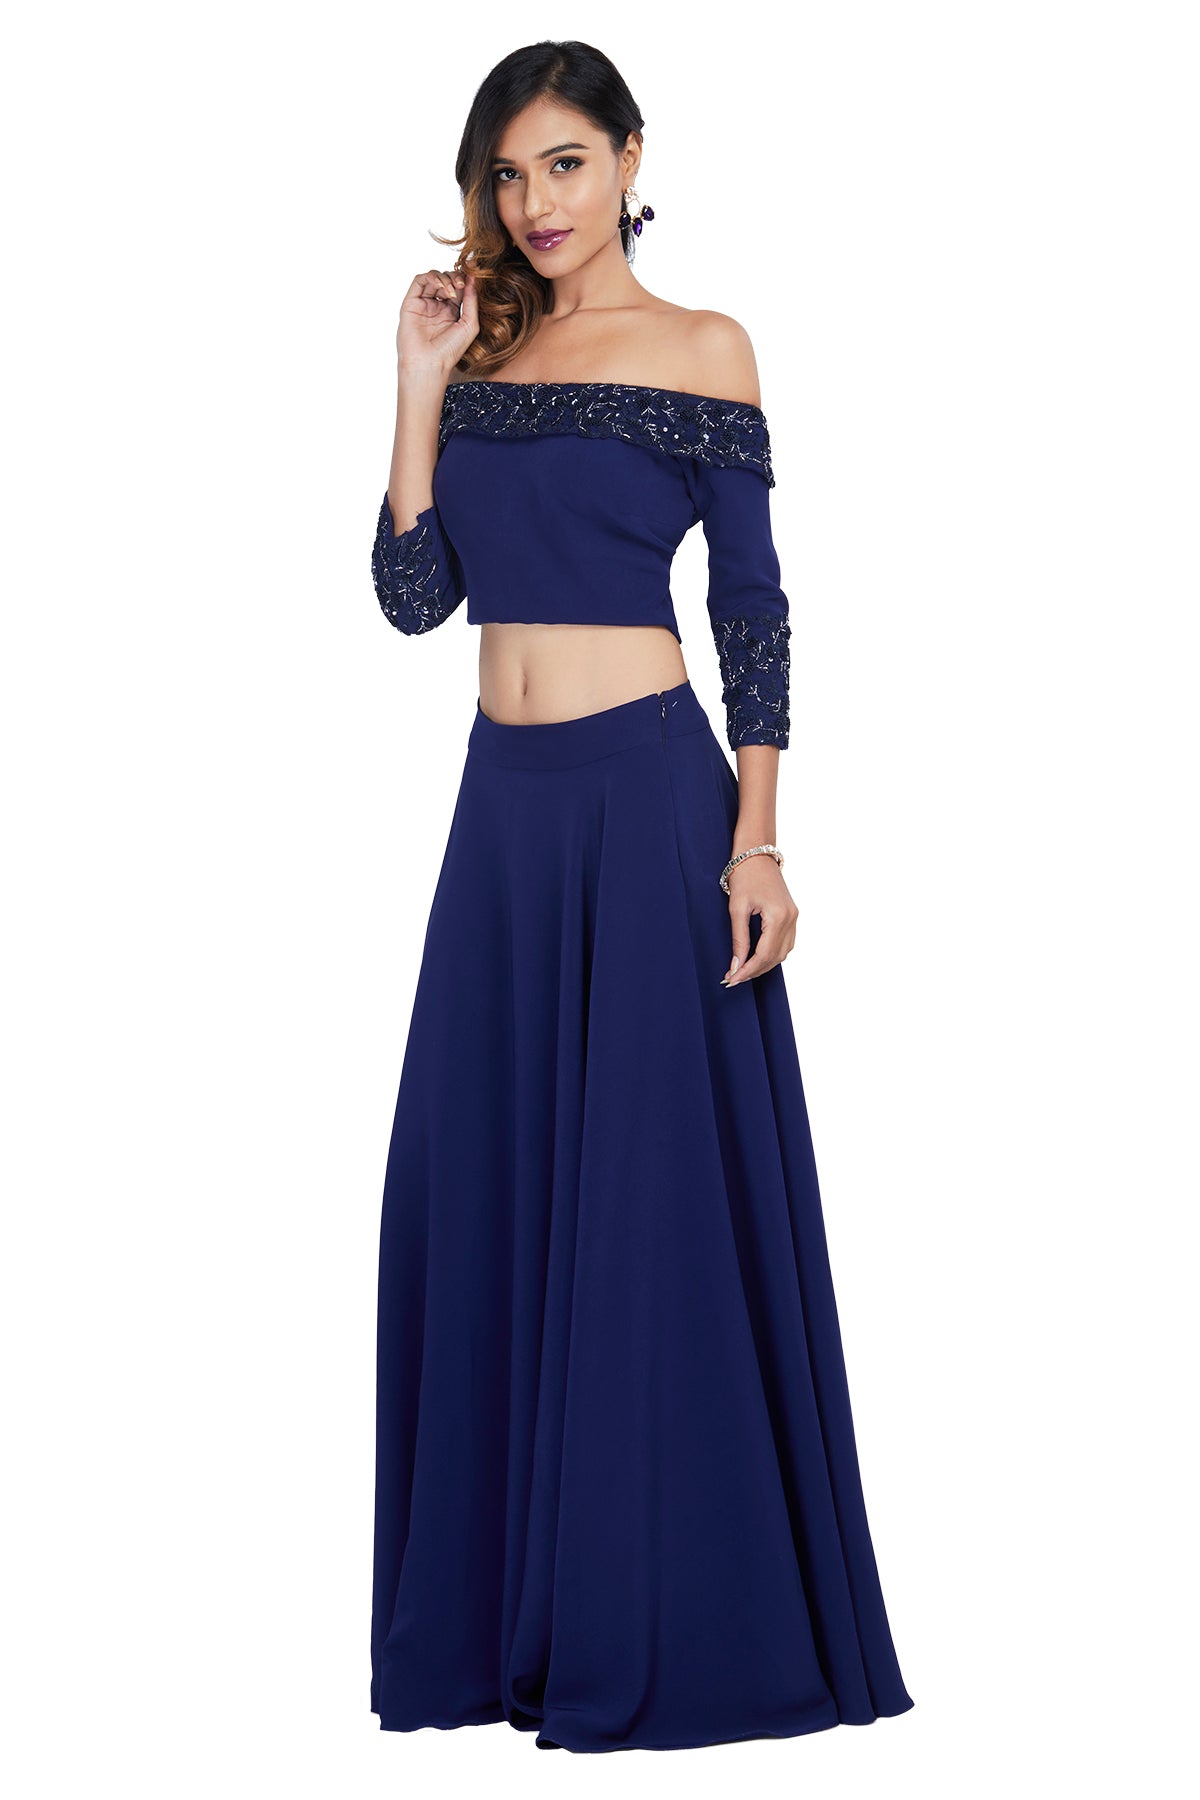 Jewelled Crop Top and Skirt – Monisha Jaising